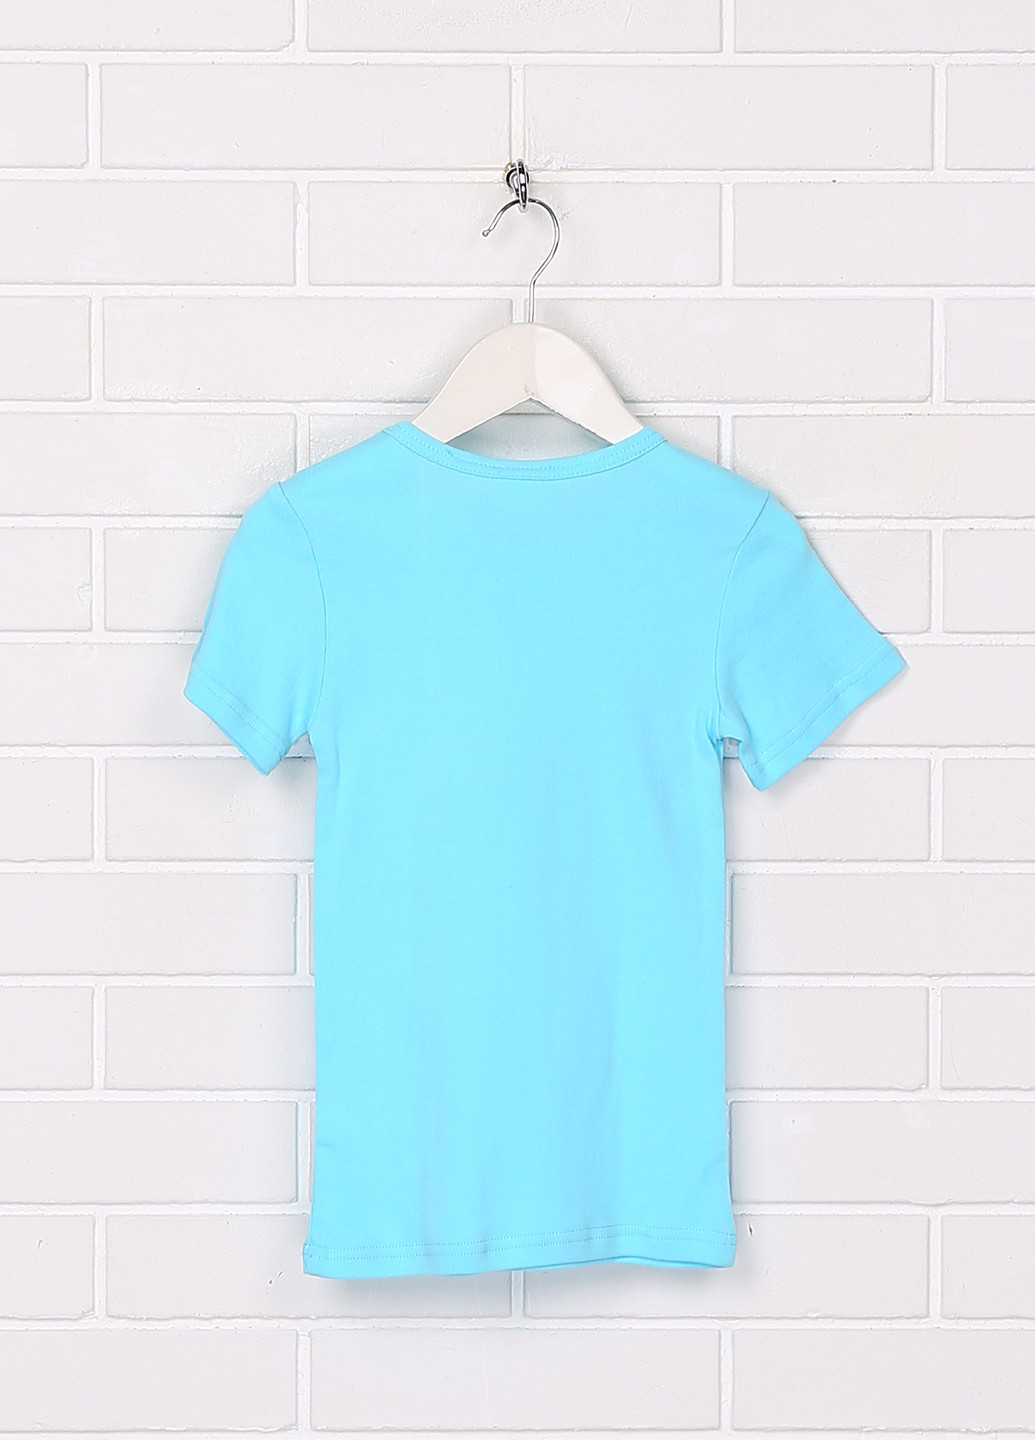 Голубая летняя футболка Роза